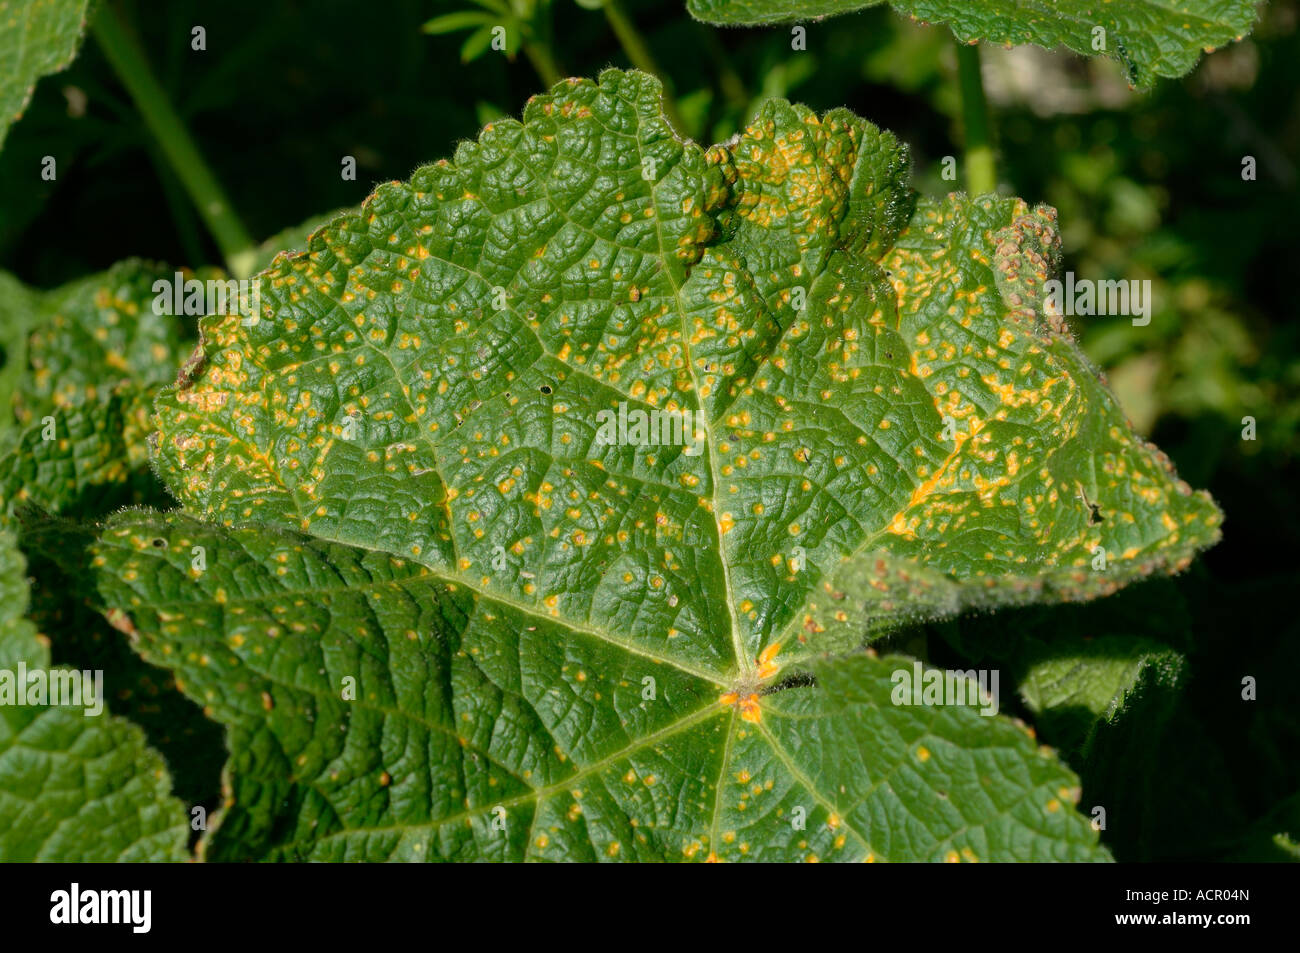 Hollyhock rust Puccinia malvacearum on hollyhock upper leaf surface Stock Photo